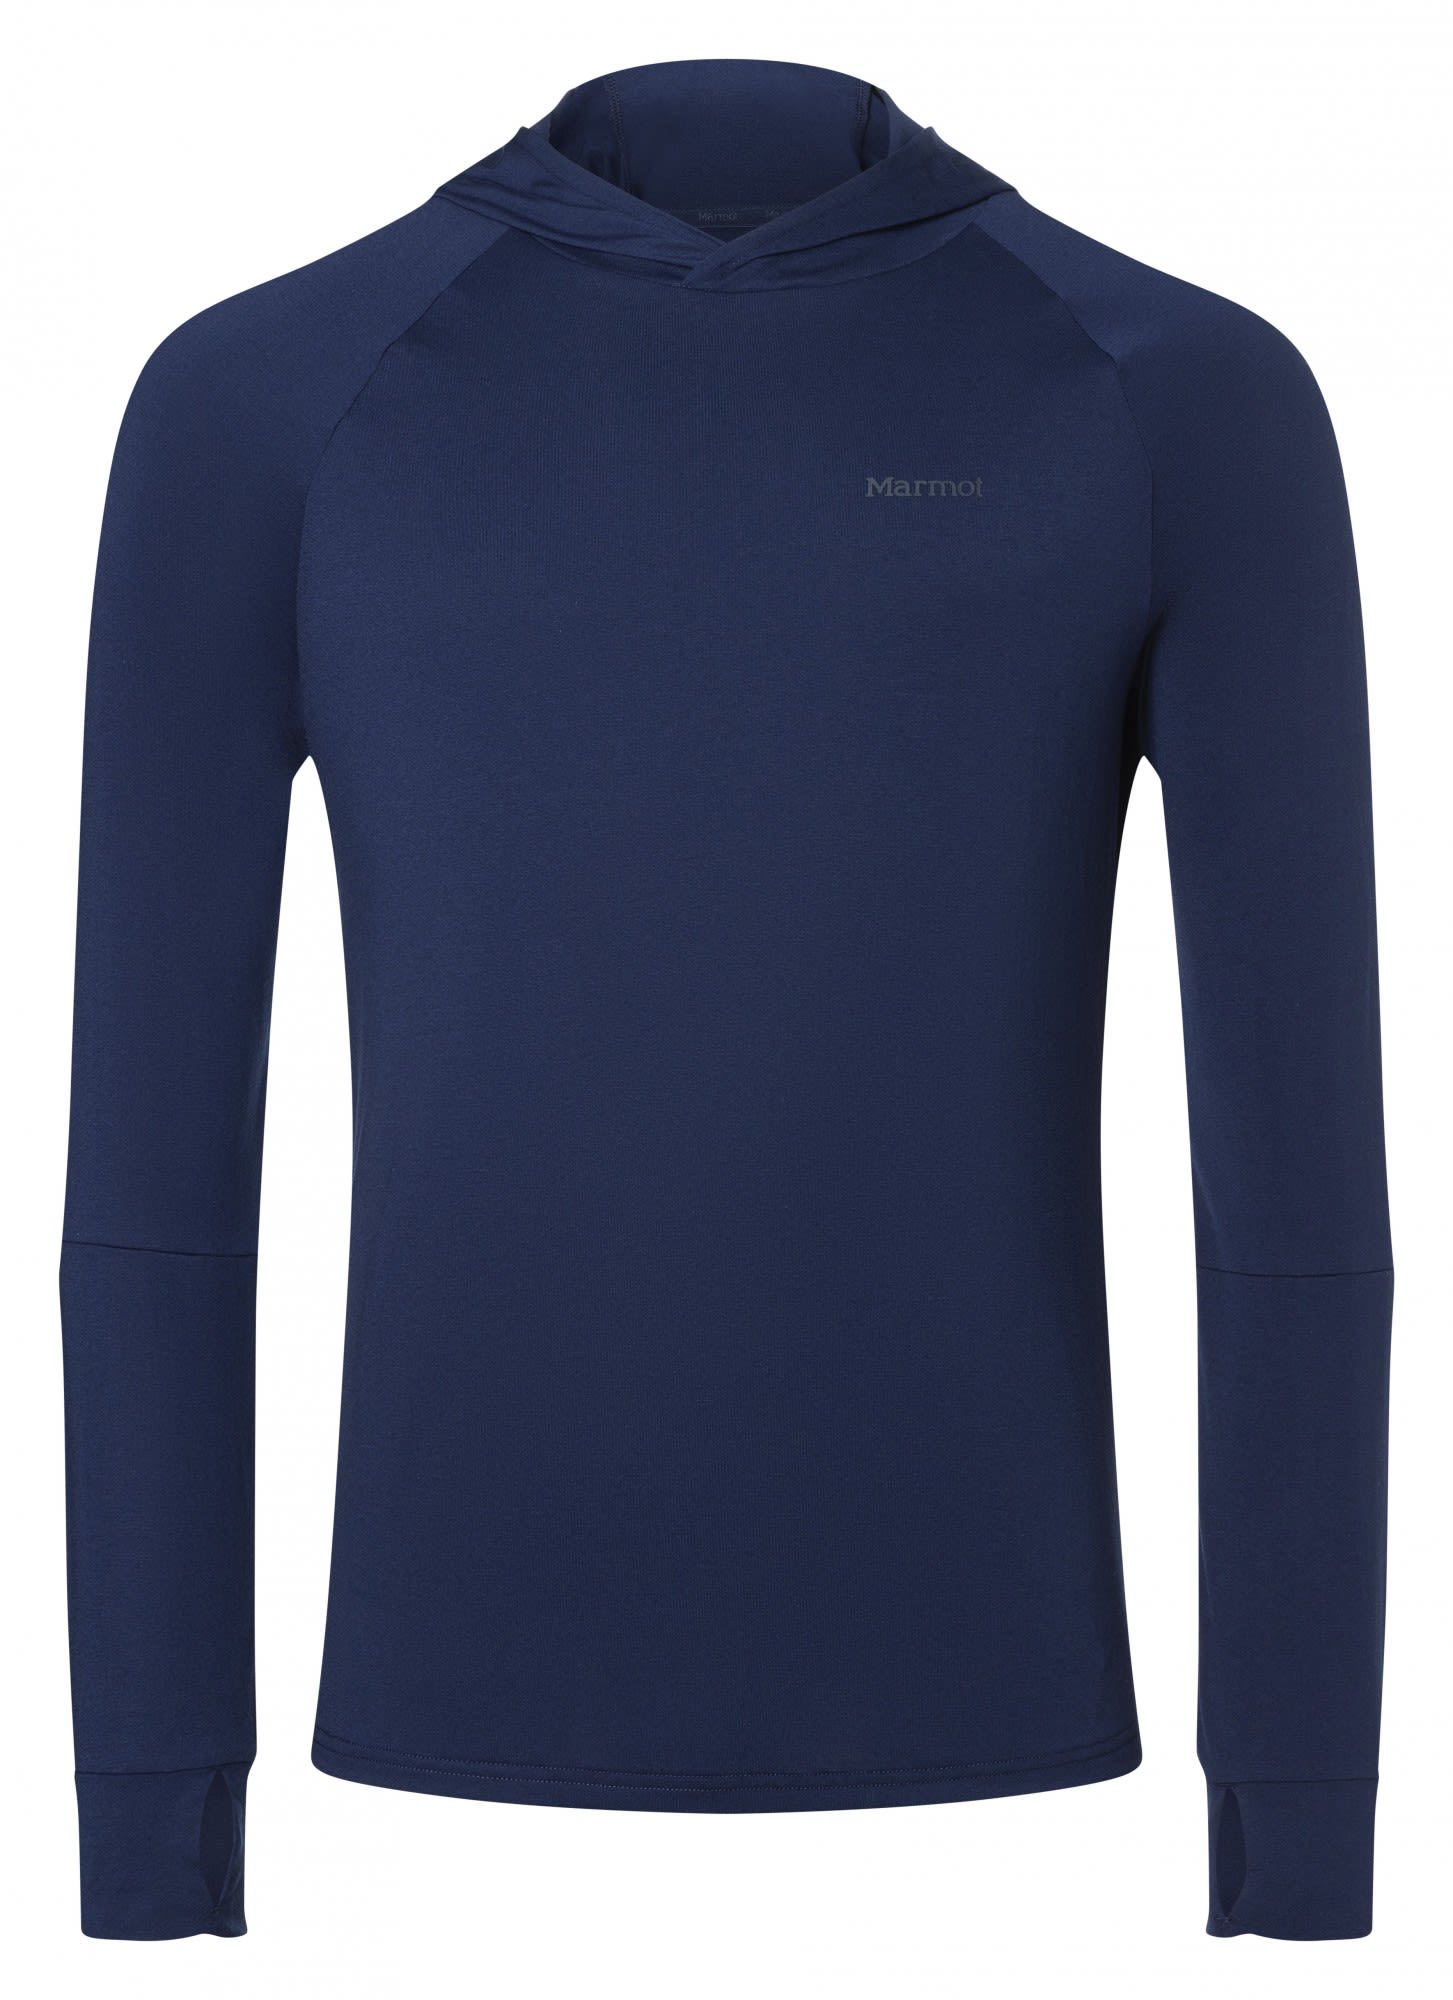 Marmot Crossover Hoodie Blau- Male Sweaters und Hoodies- Grsse S - Farbe Arctic Navy